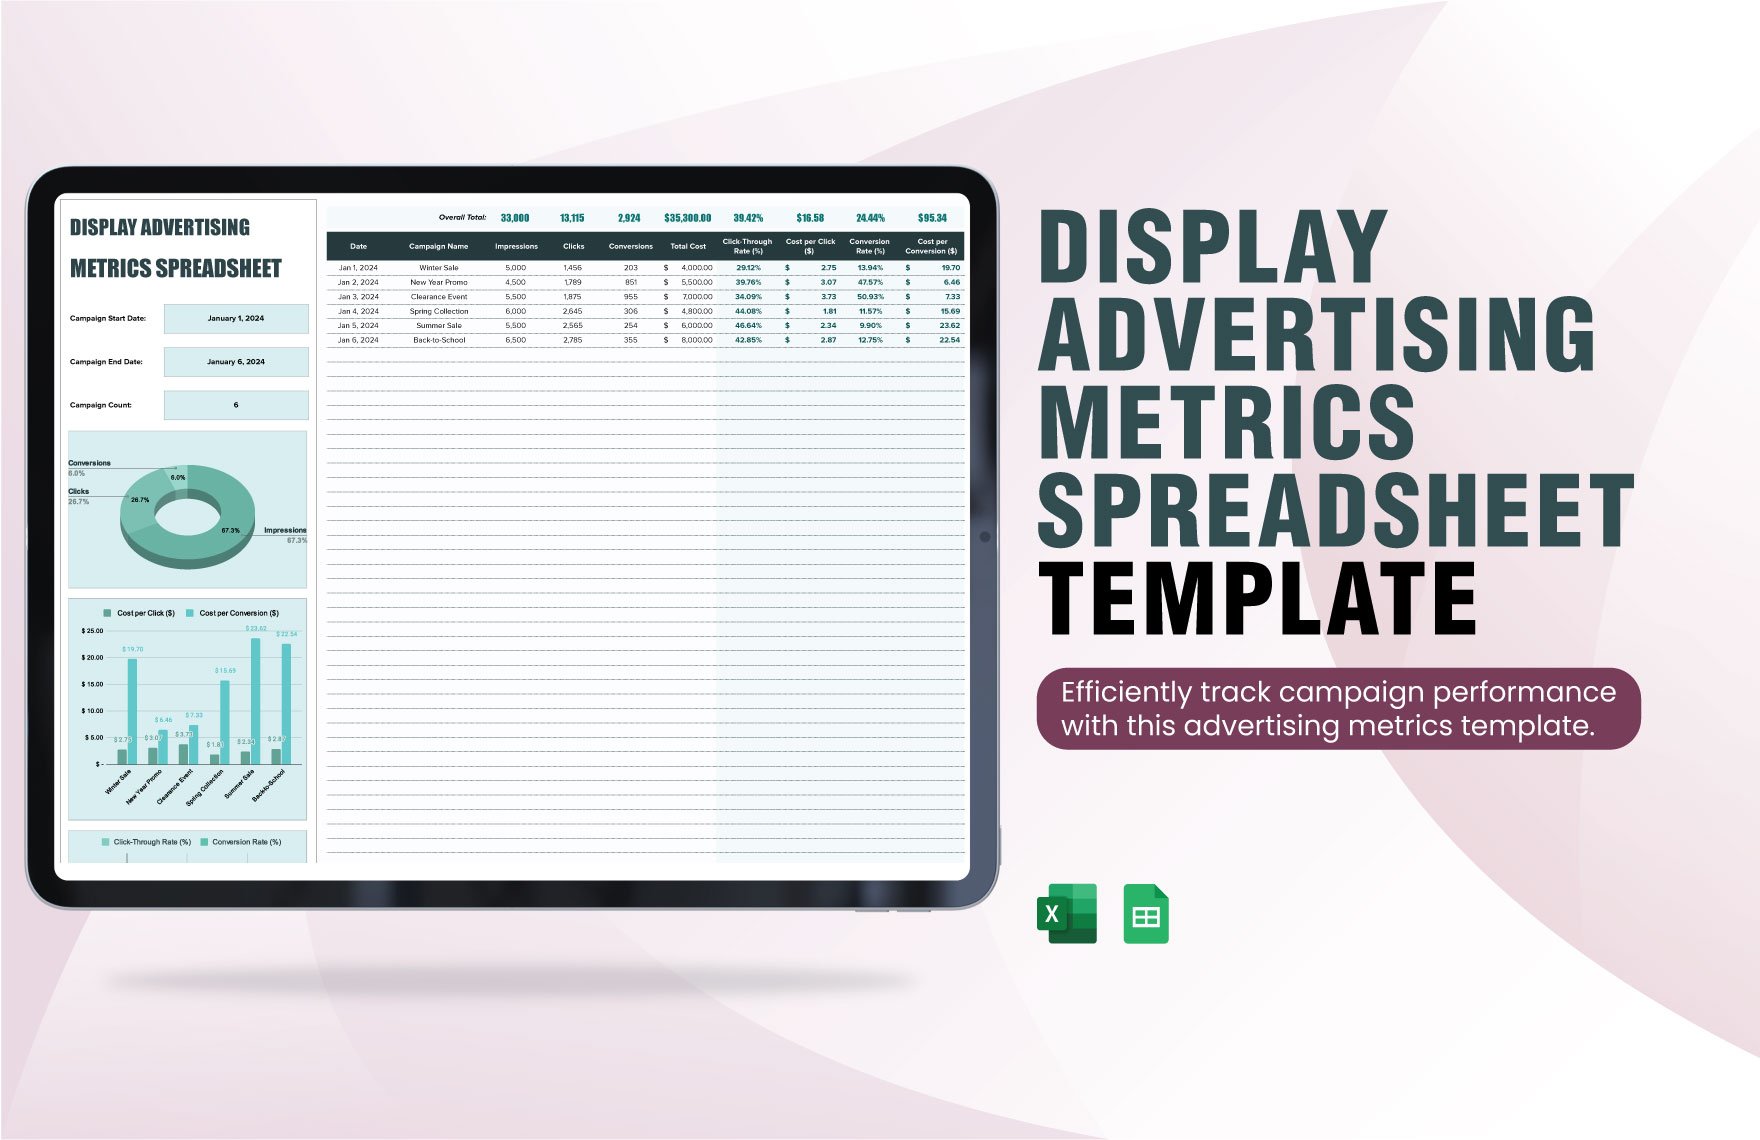 Display Advertising Metrics Spreadsheet Template in Excel, Google Sheets